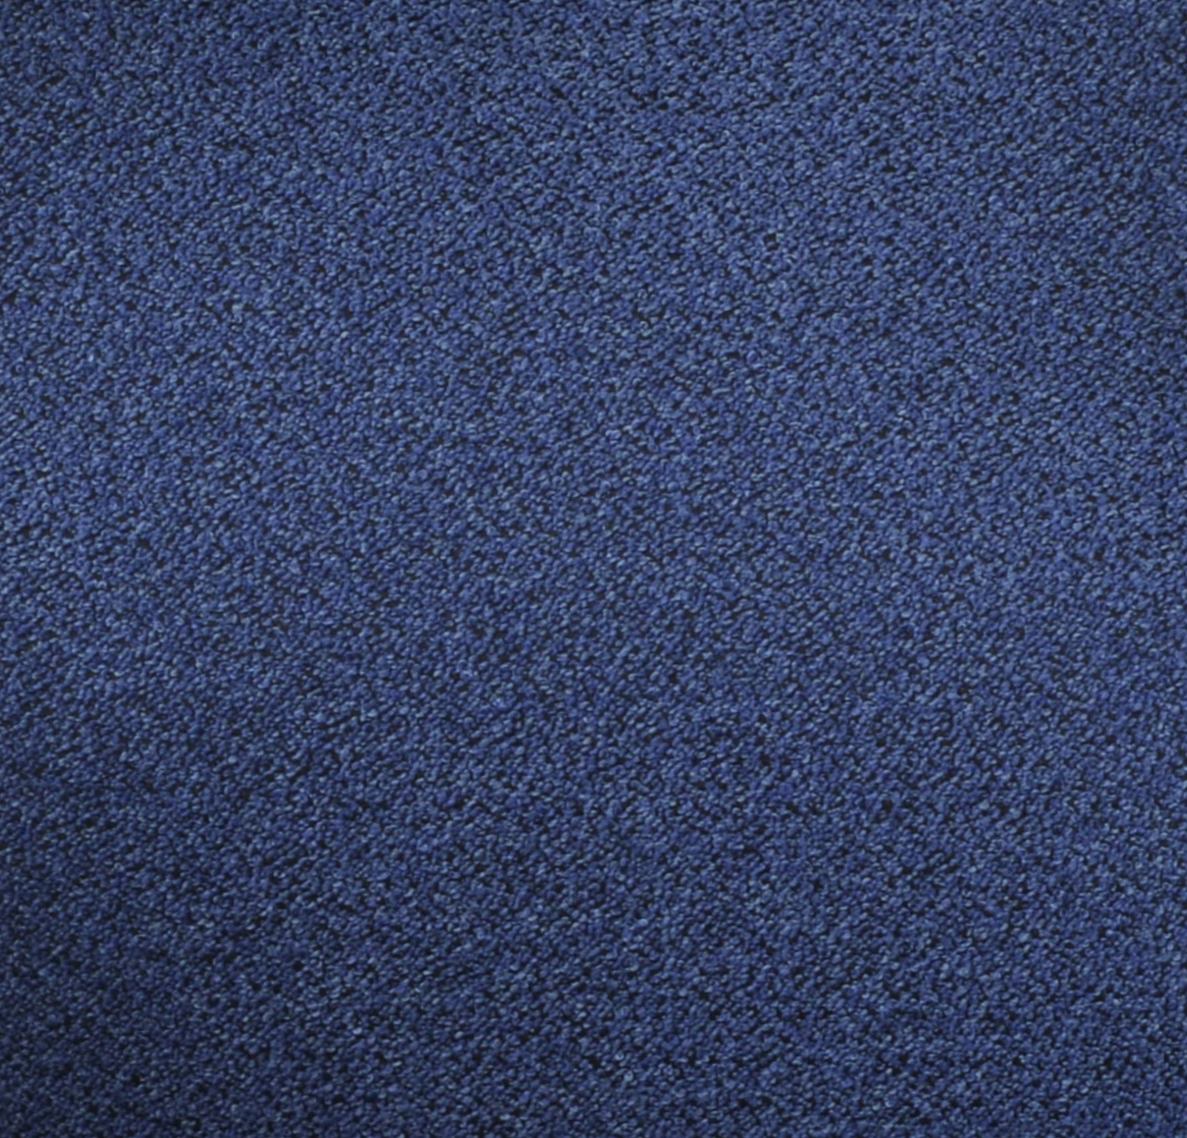 Blue Black Boucle Fabric [+€51.60]